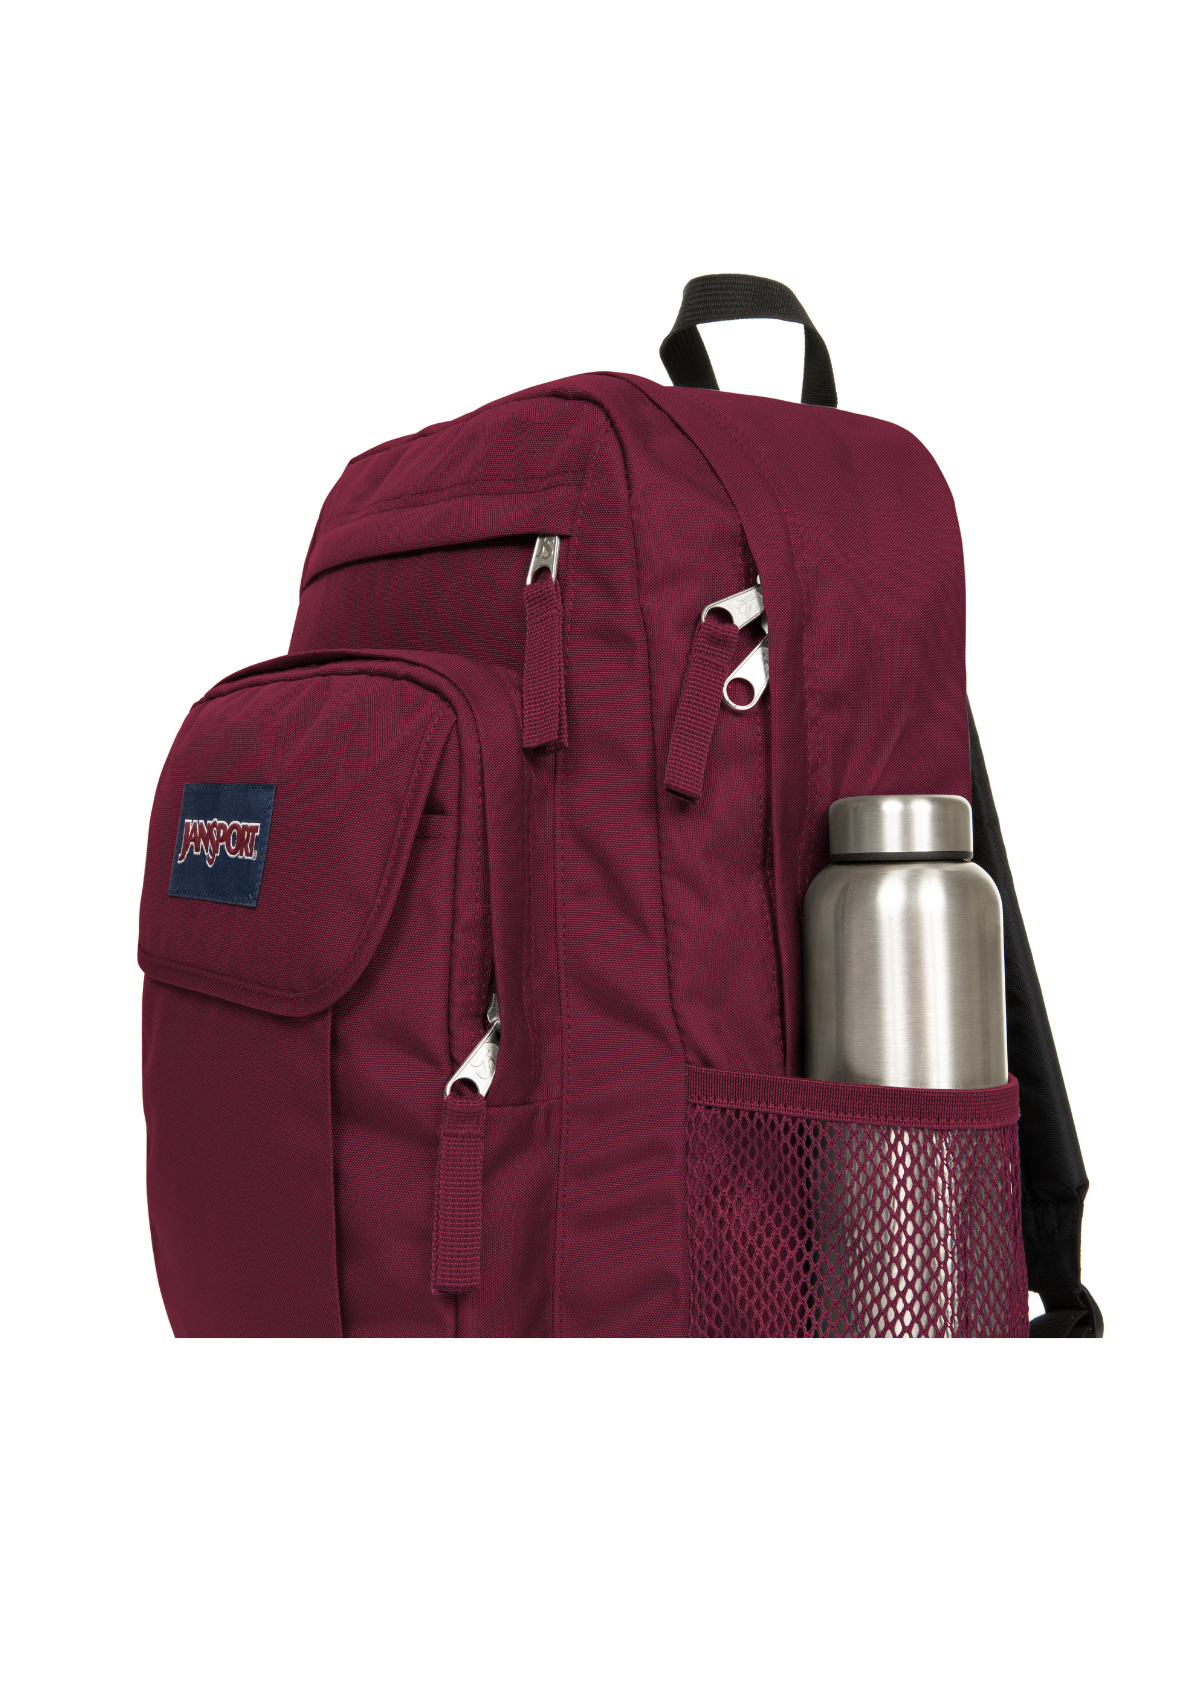 JanSport Backpacks Union Pack Russet Red